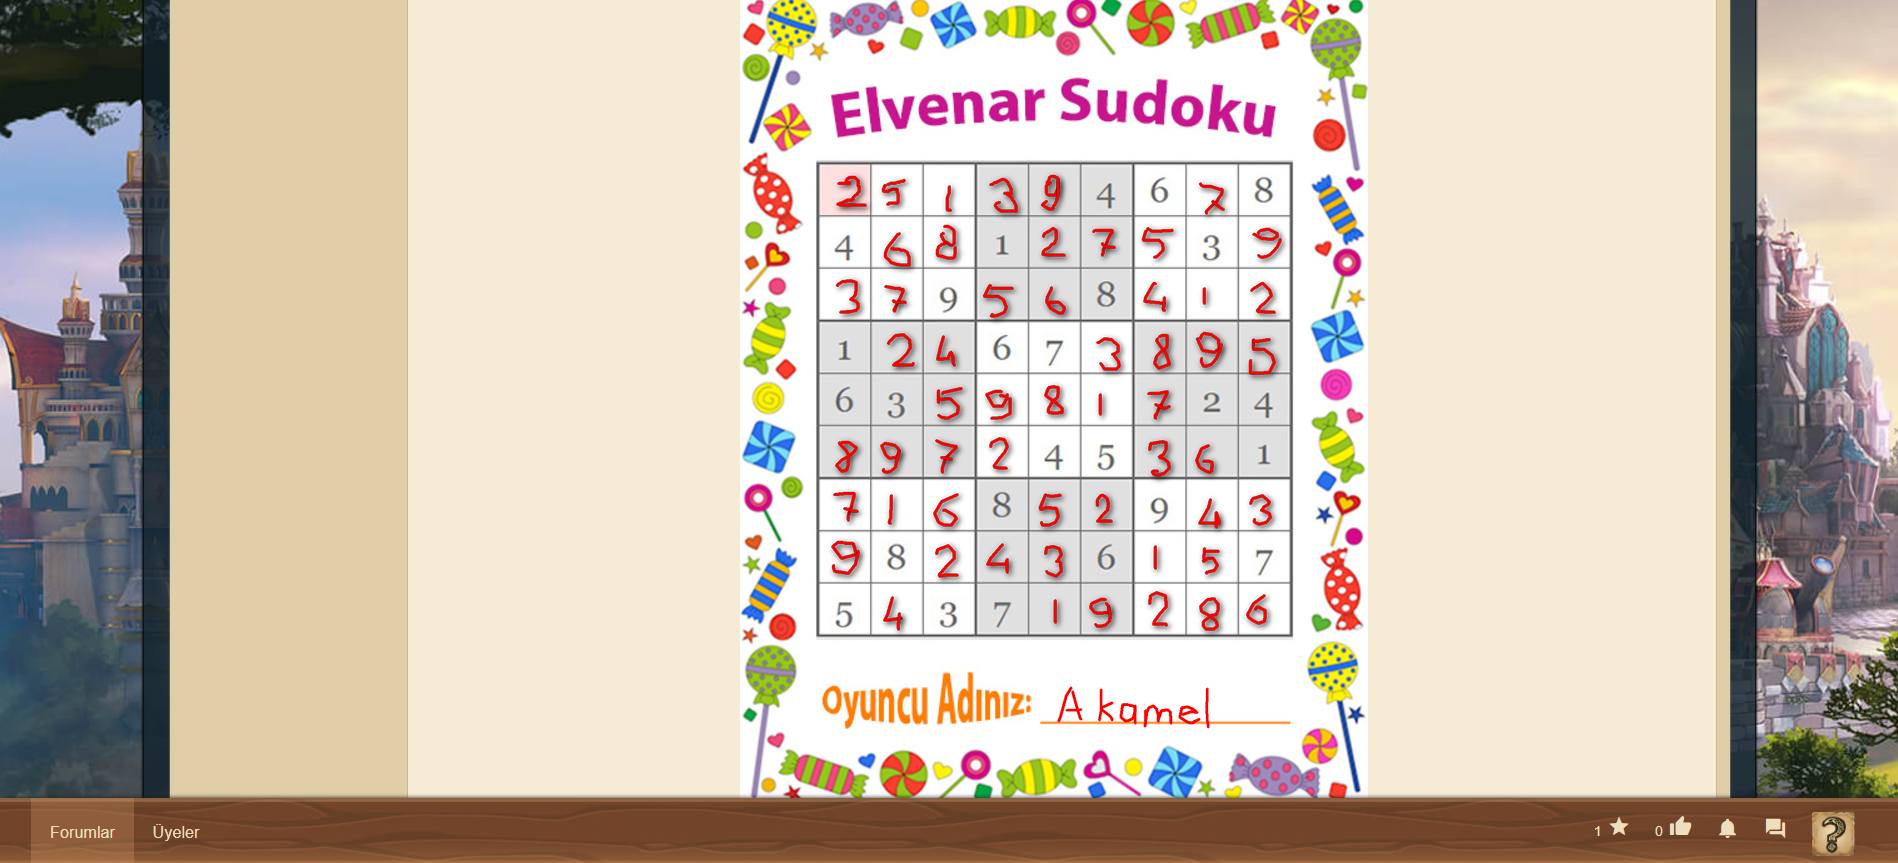 Sudoku Akamel.jpg